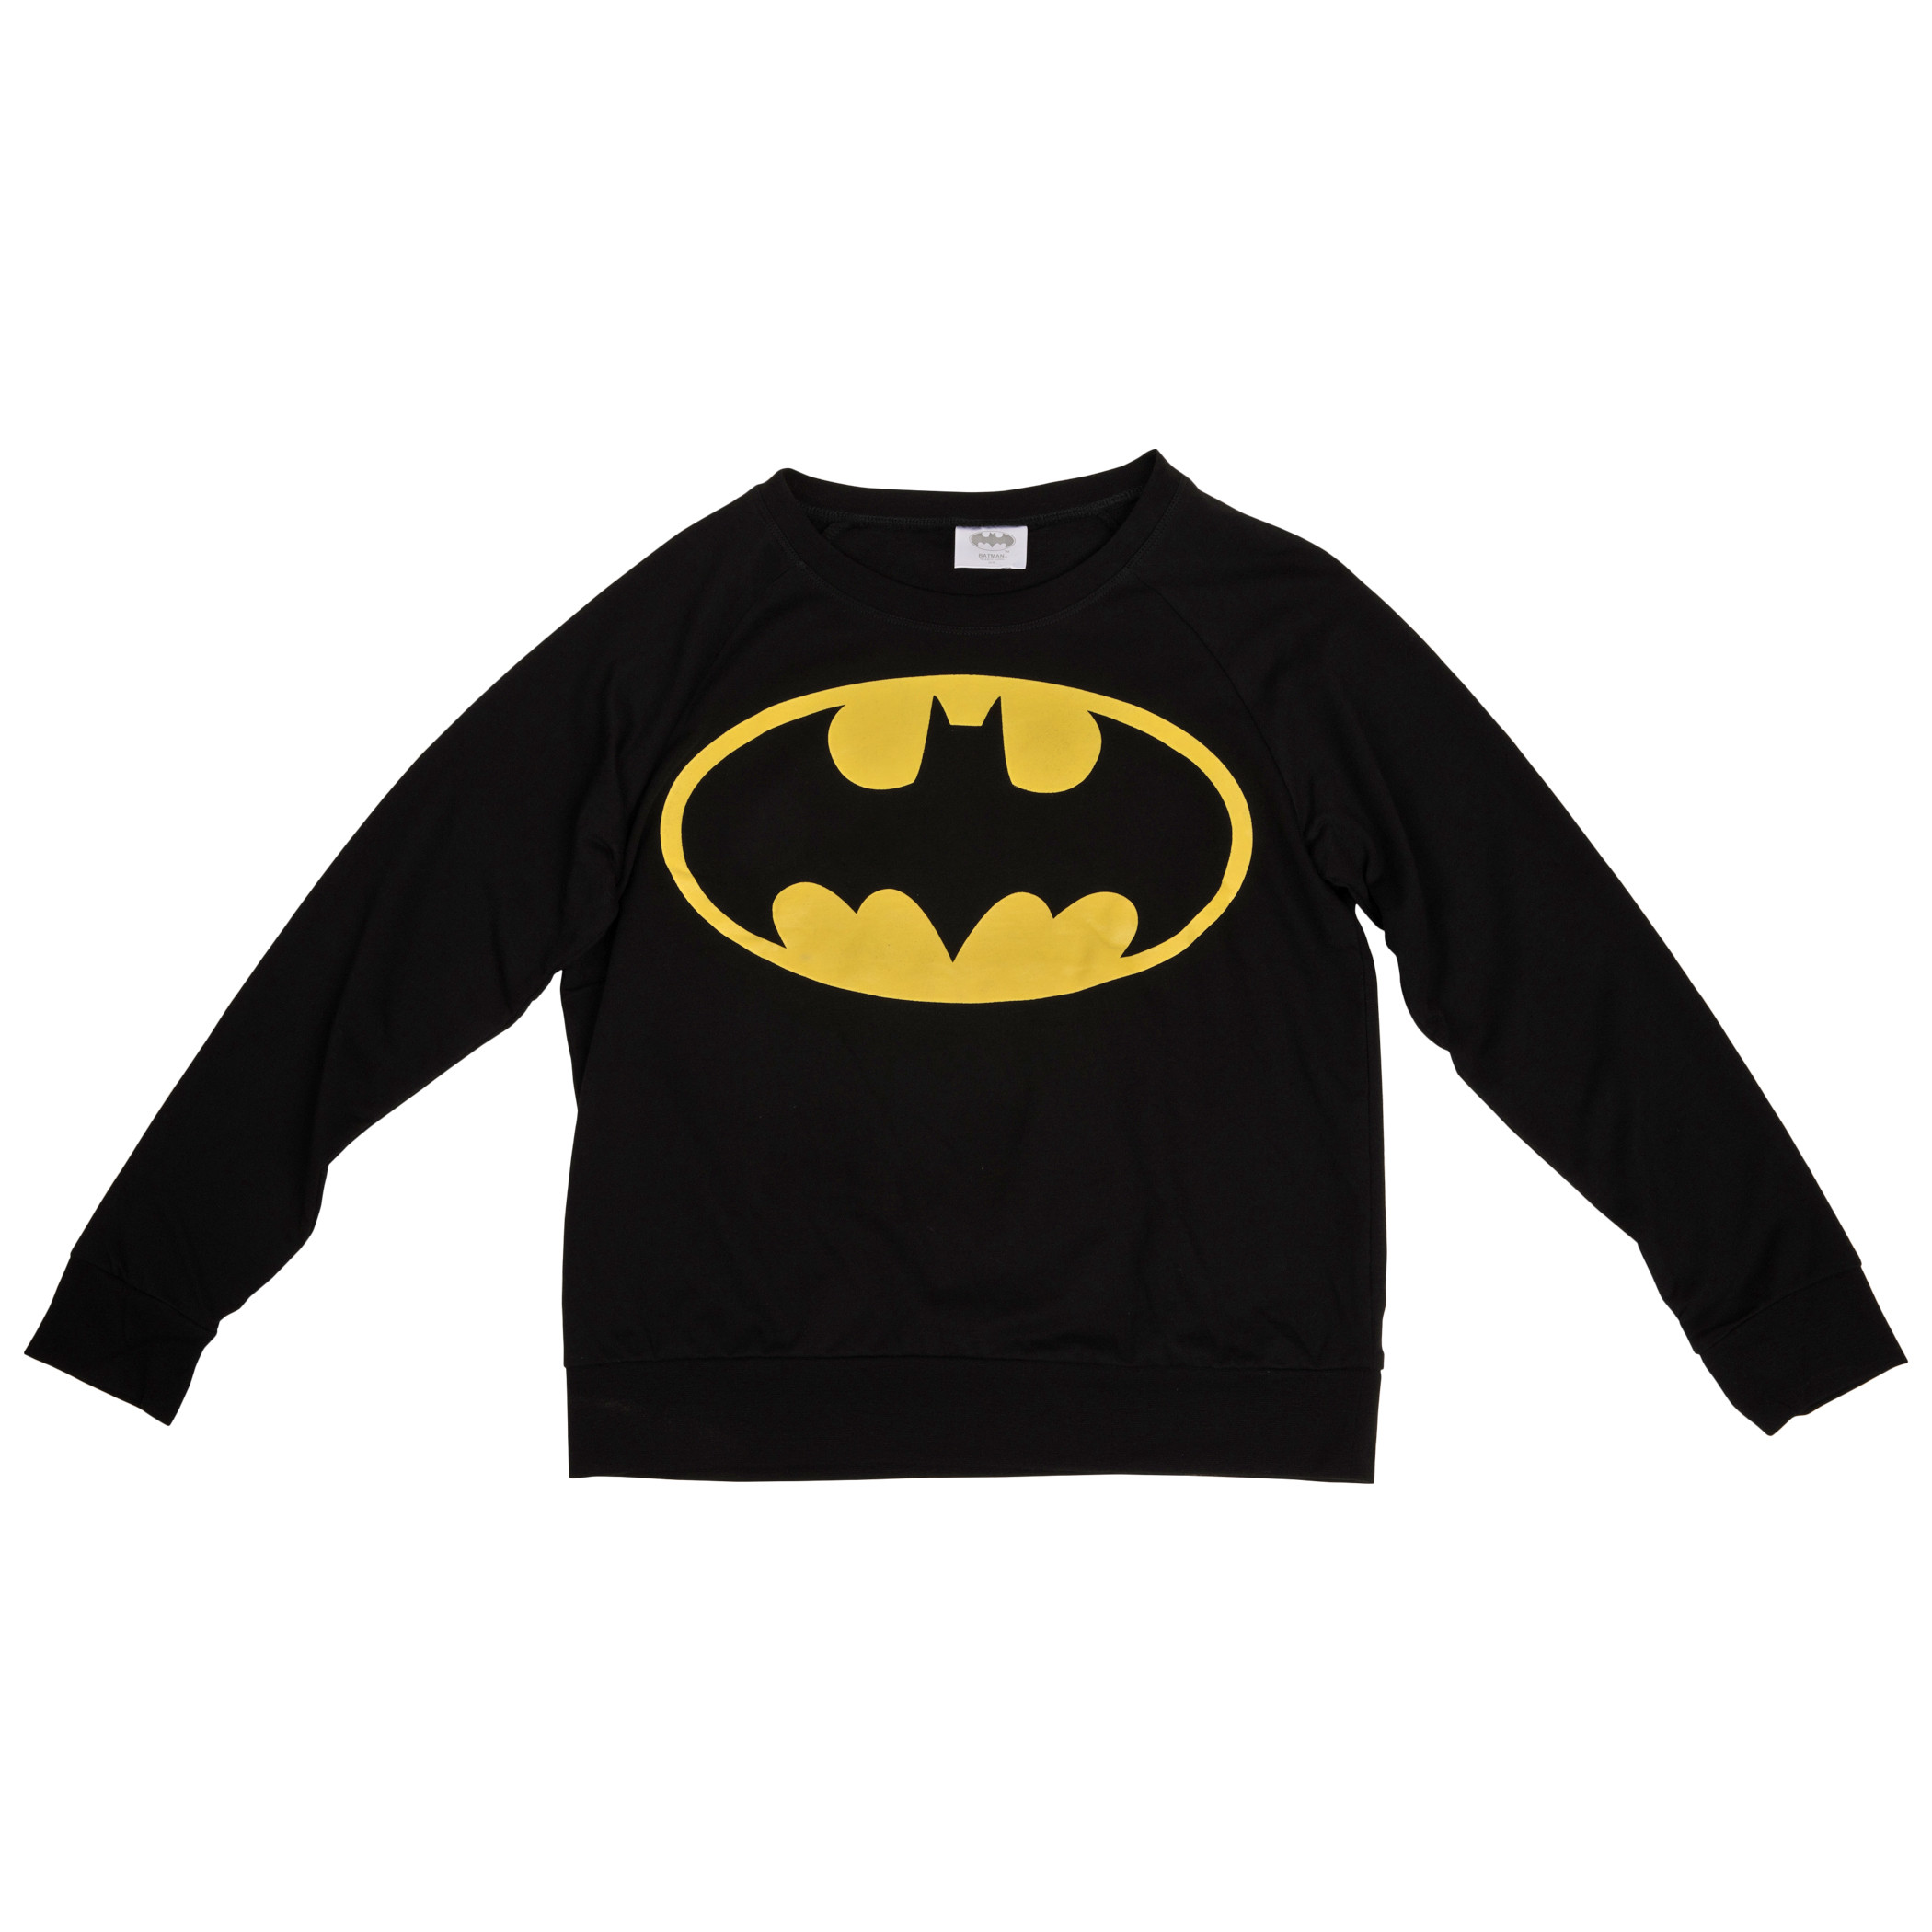 DC Comics Batman Classic Symbol Women's Sweatshirt